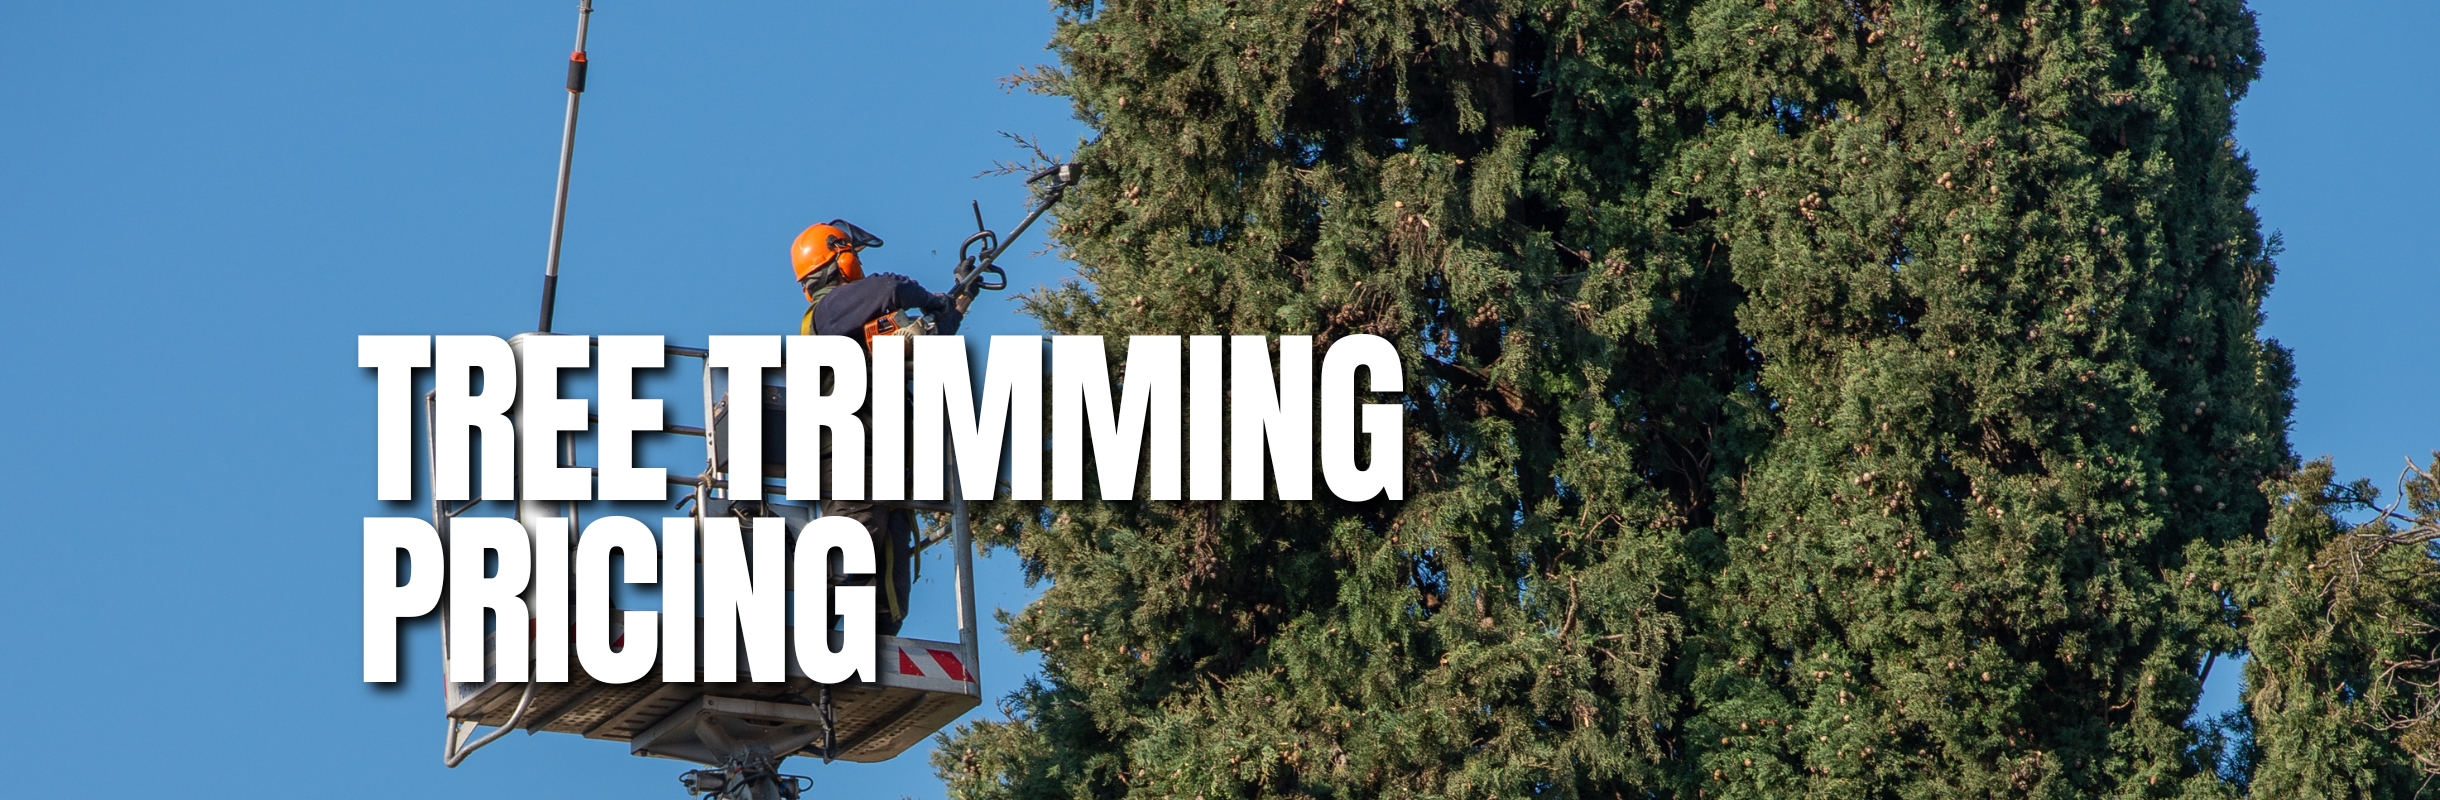 Tree-Trimming-Pricing